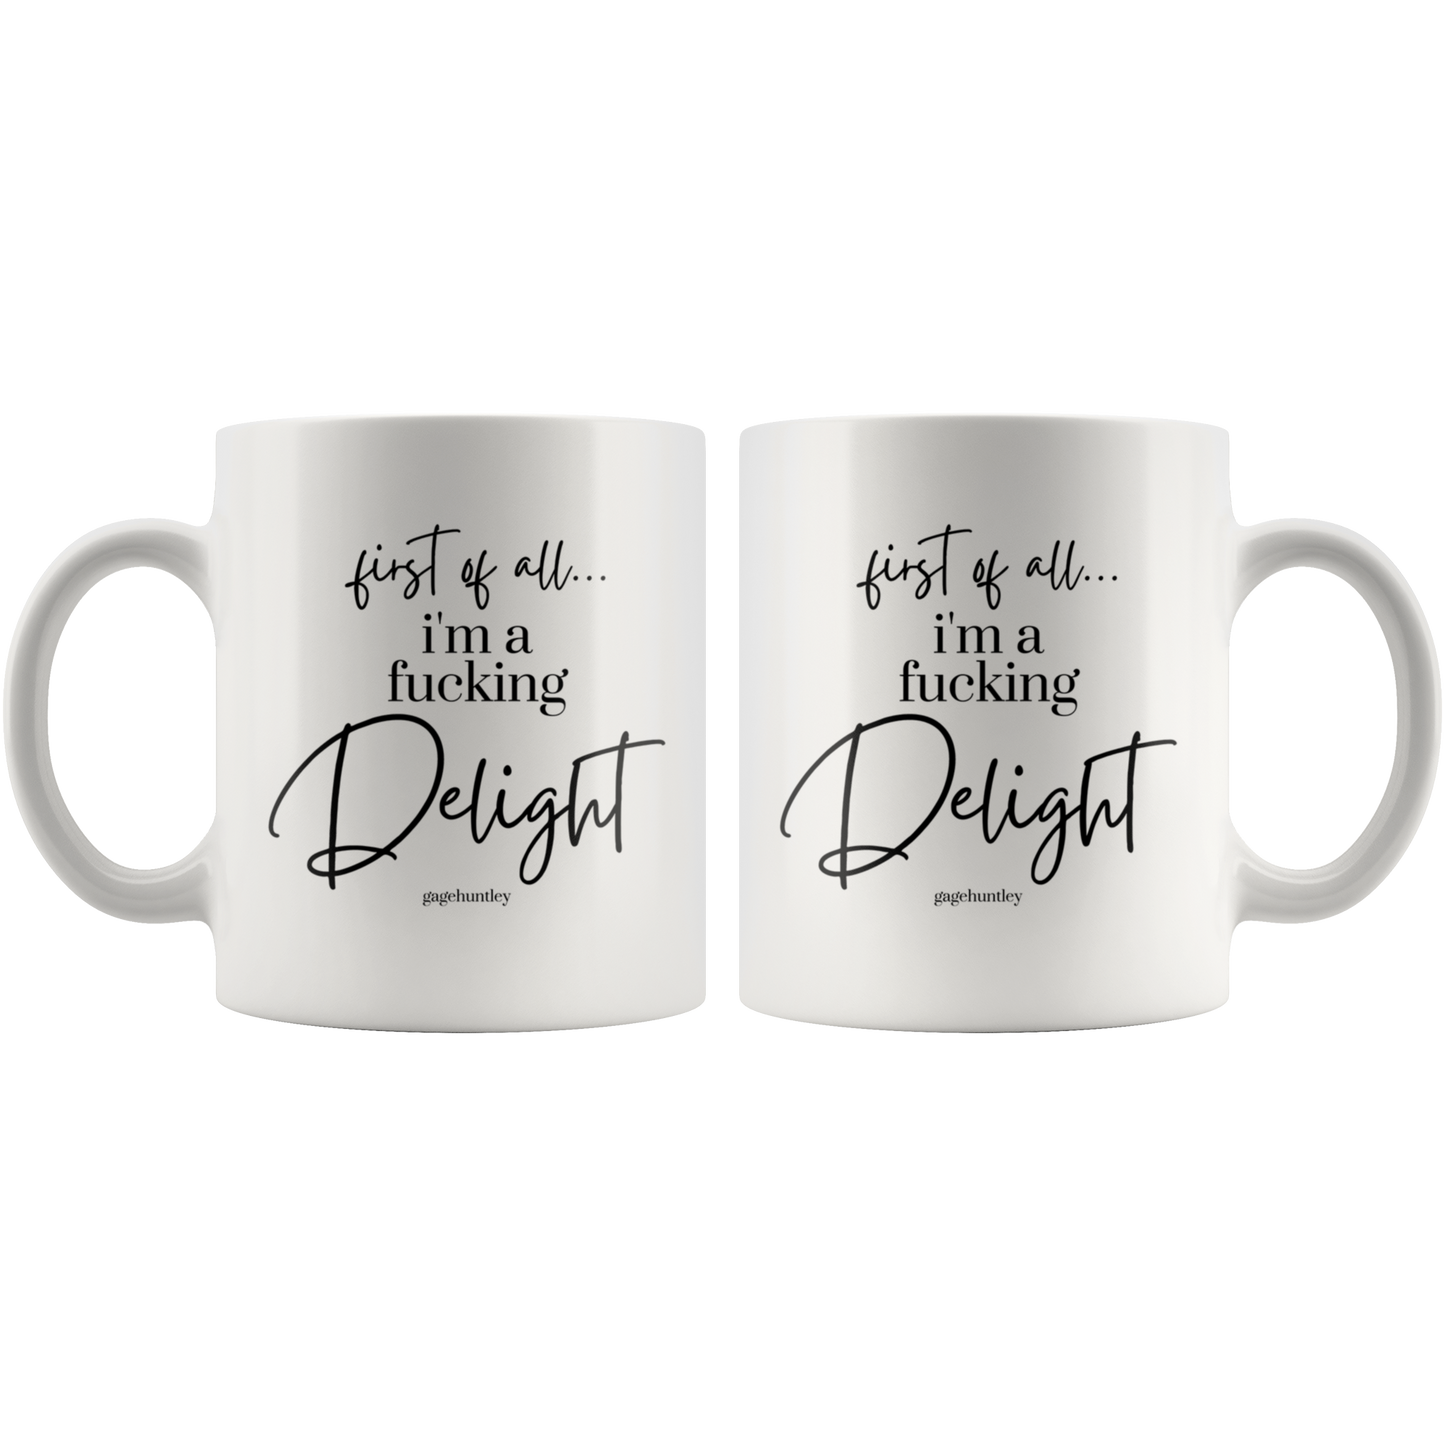 I'm a Delight- Coffee Mug